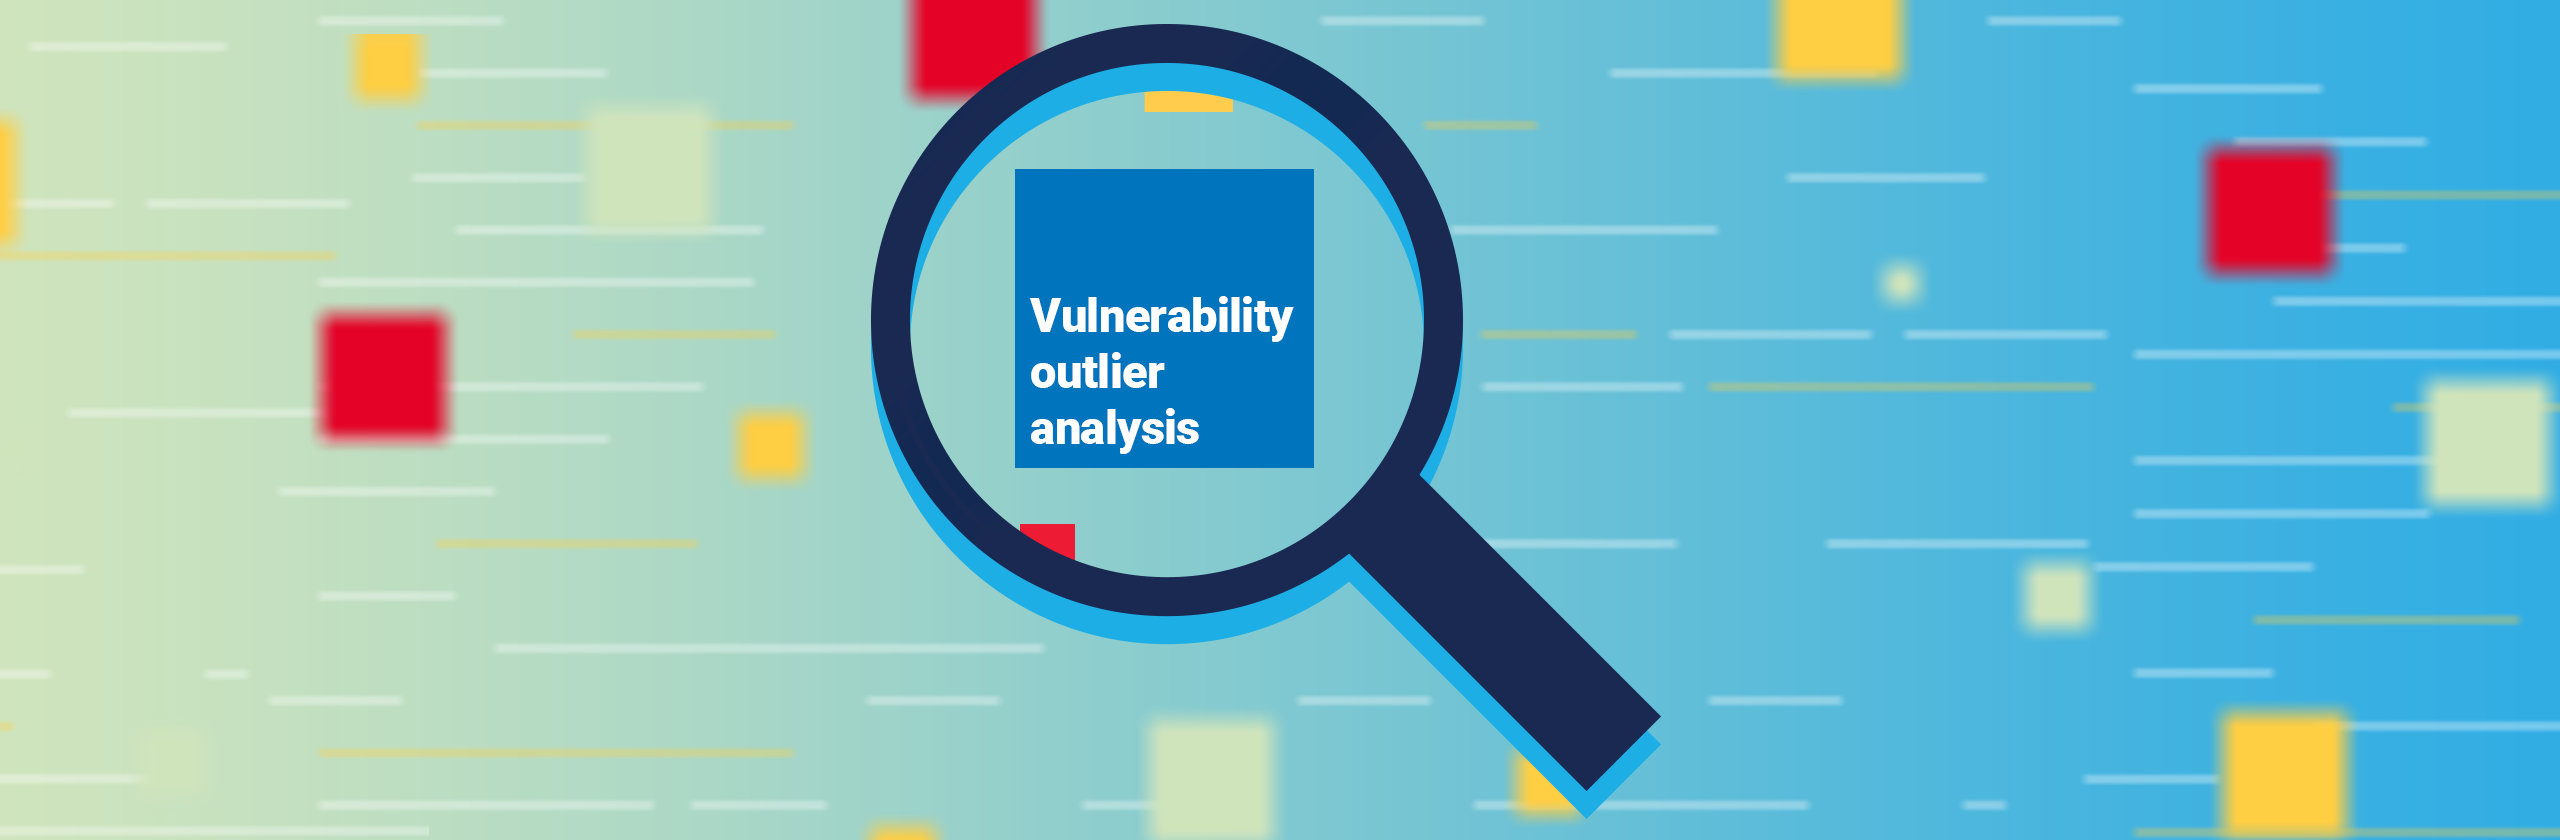 MotM: Vulnerability outlier analysis banner